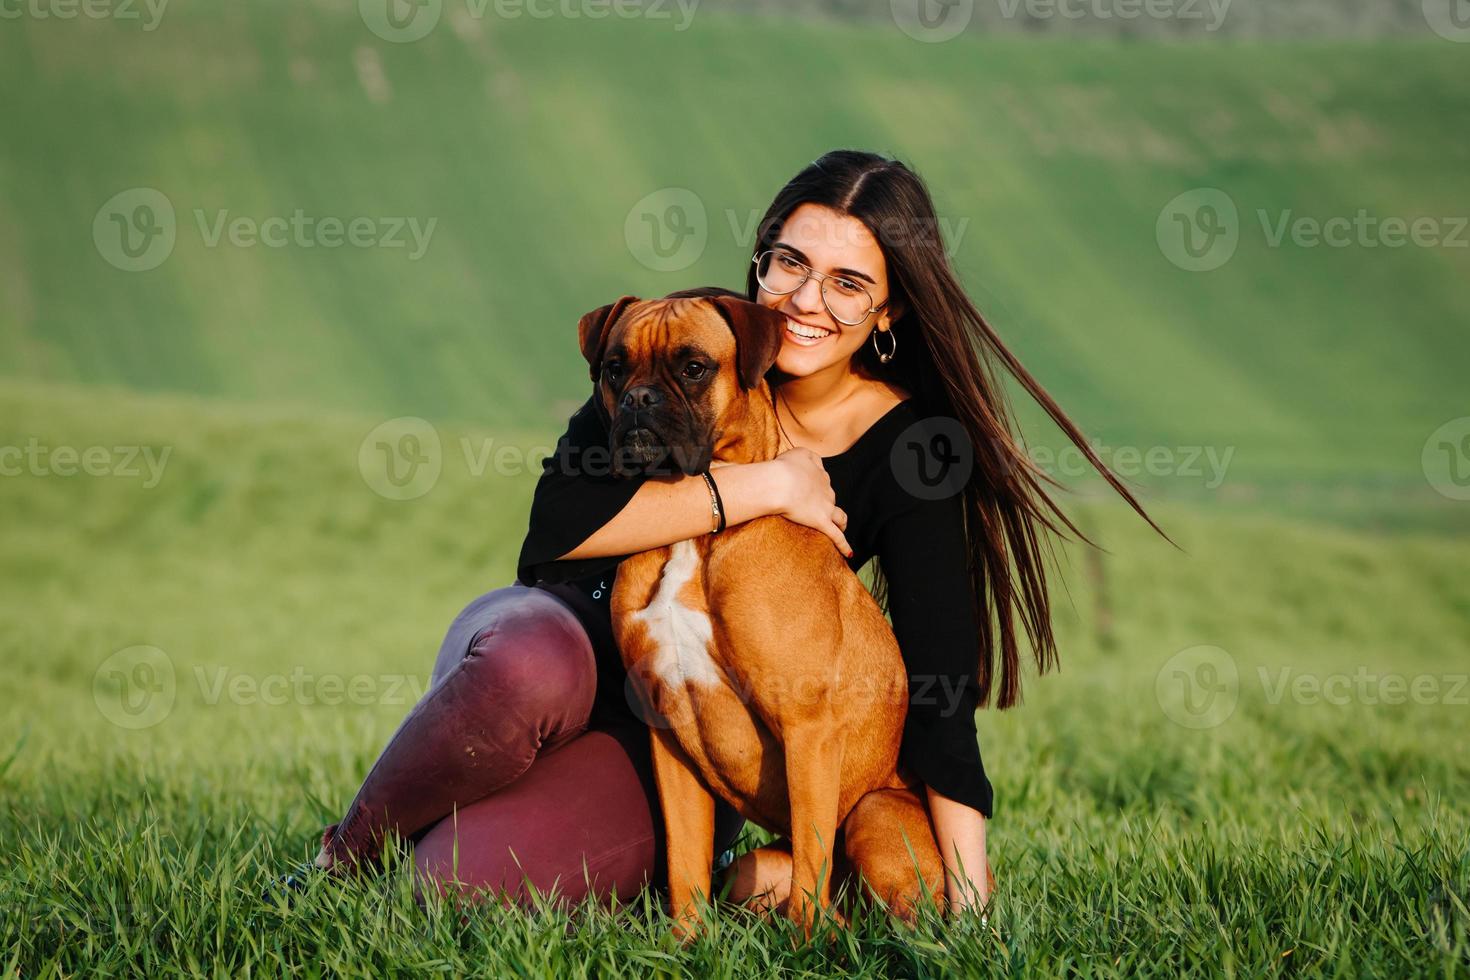 hermosa mujer jugando con su perro. retrato al aire libre. foto